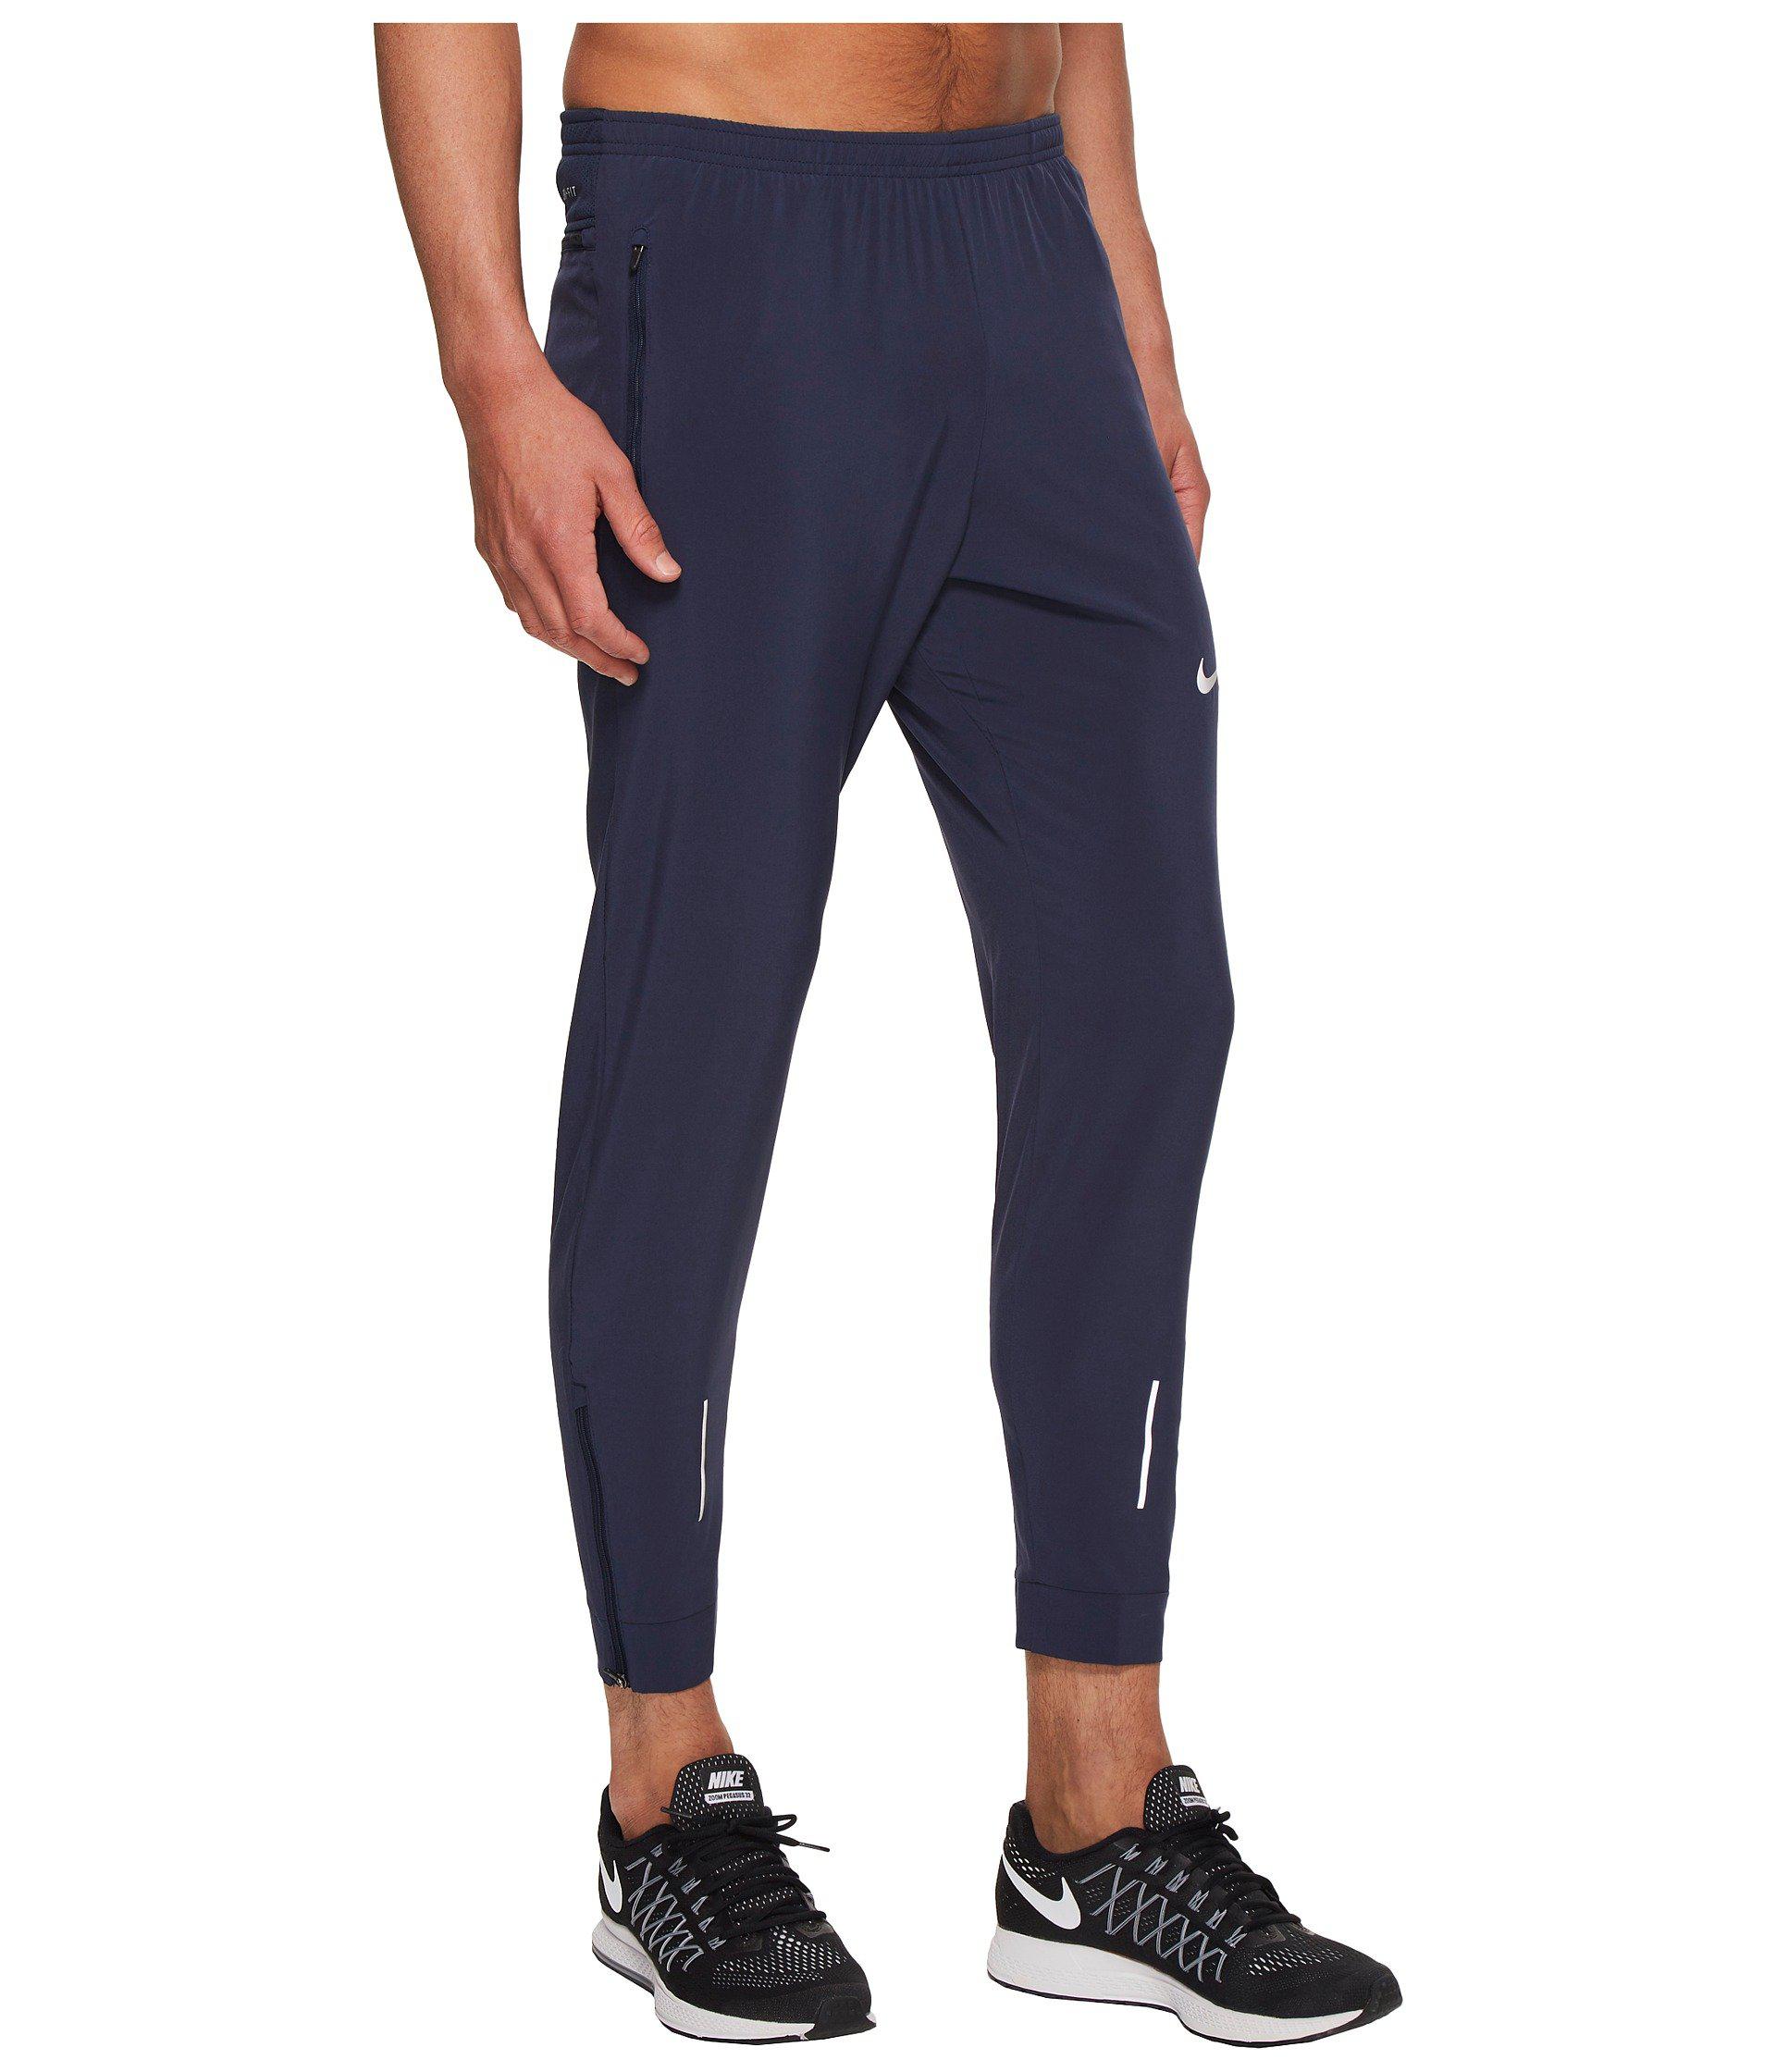 Lyst - Nike Flex Essential Running Pant in Blue for Men